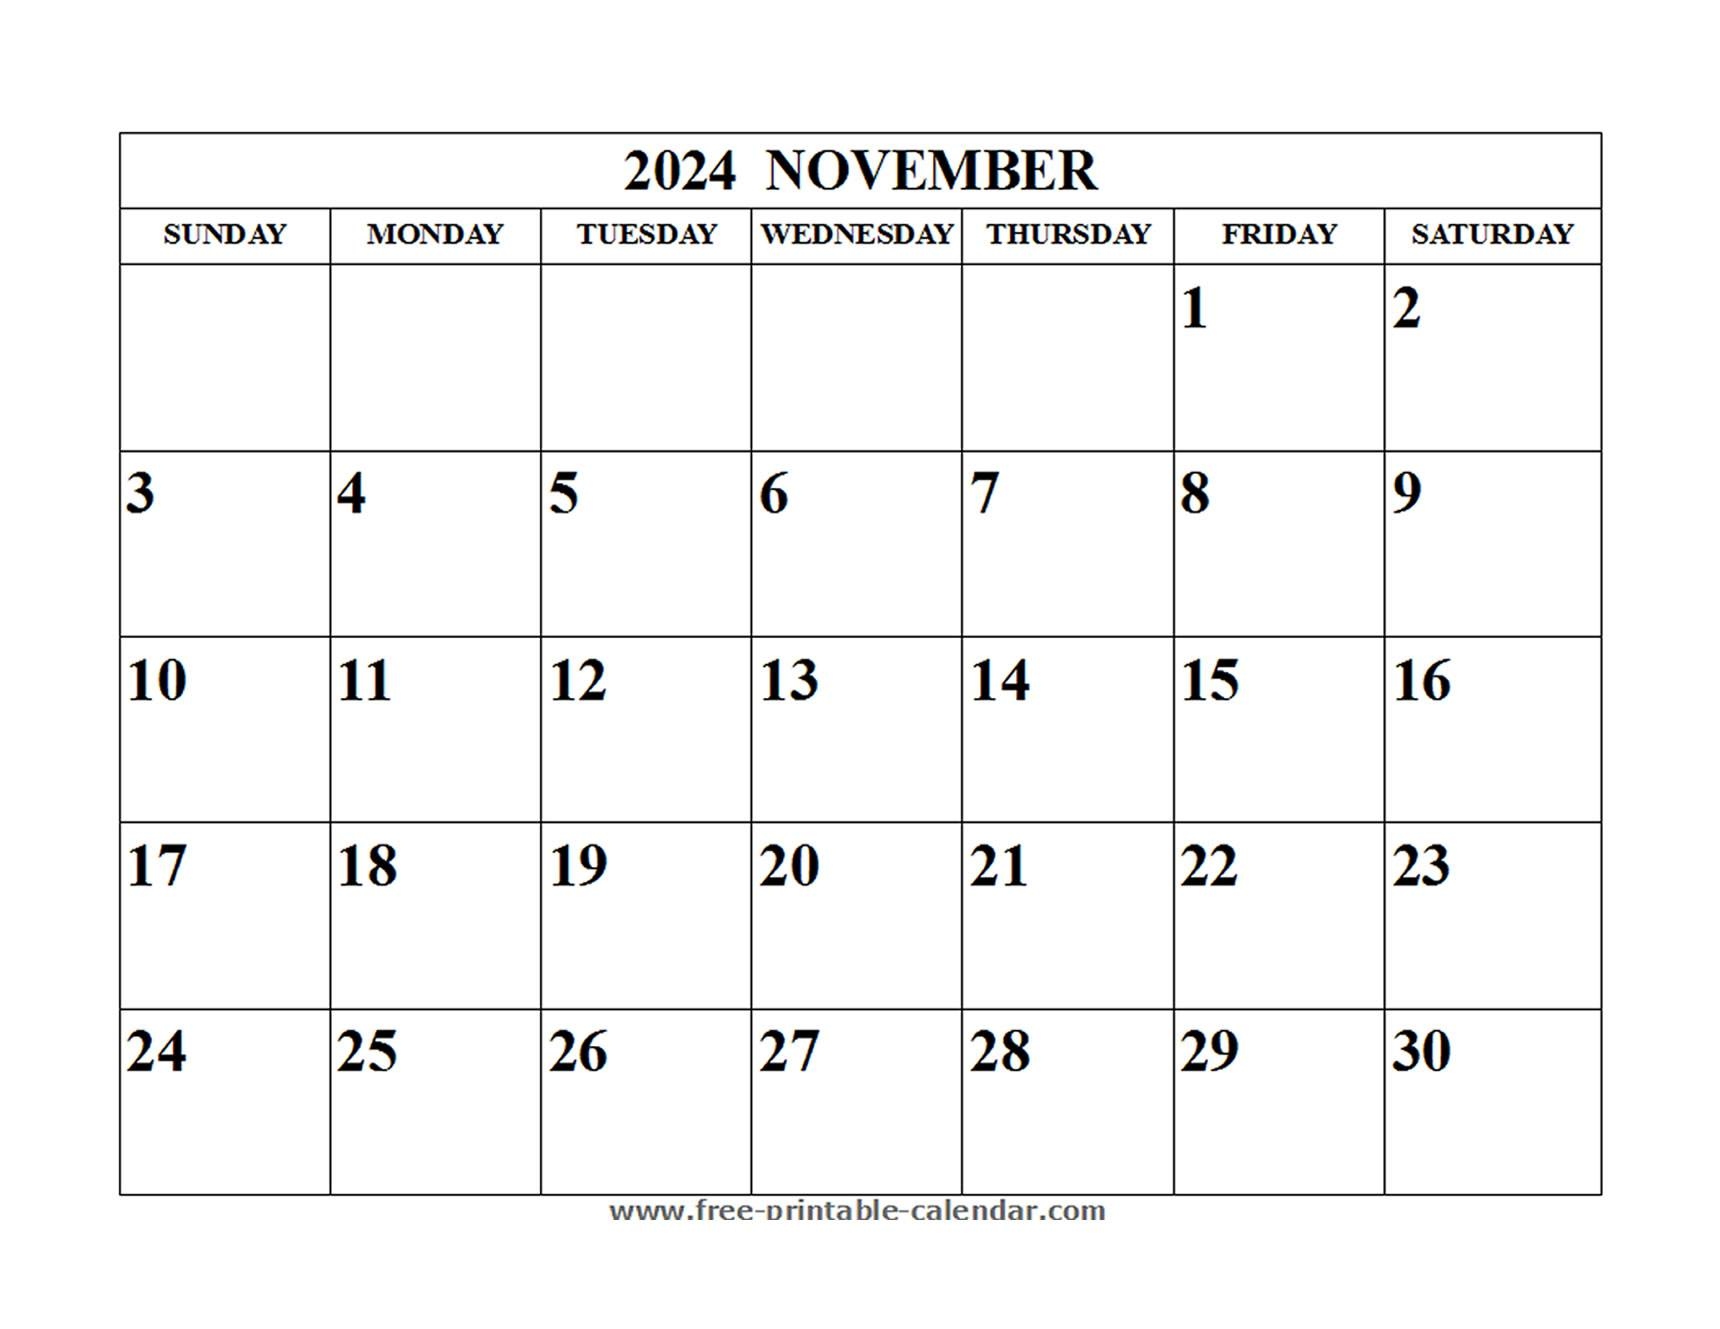 Blank November 2024 Calendar - Free-Printable-Calendar pertaining to Free Printable Blank Calendar 2024 November